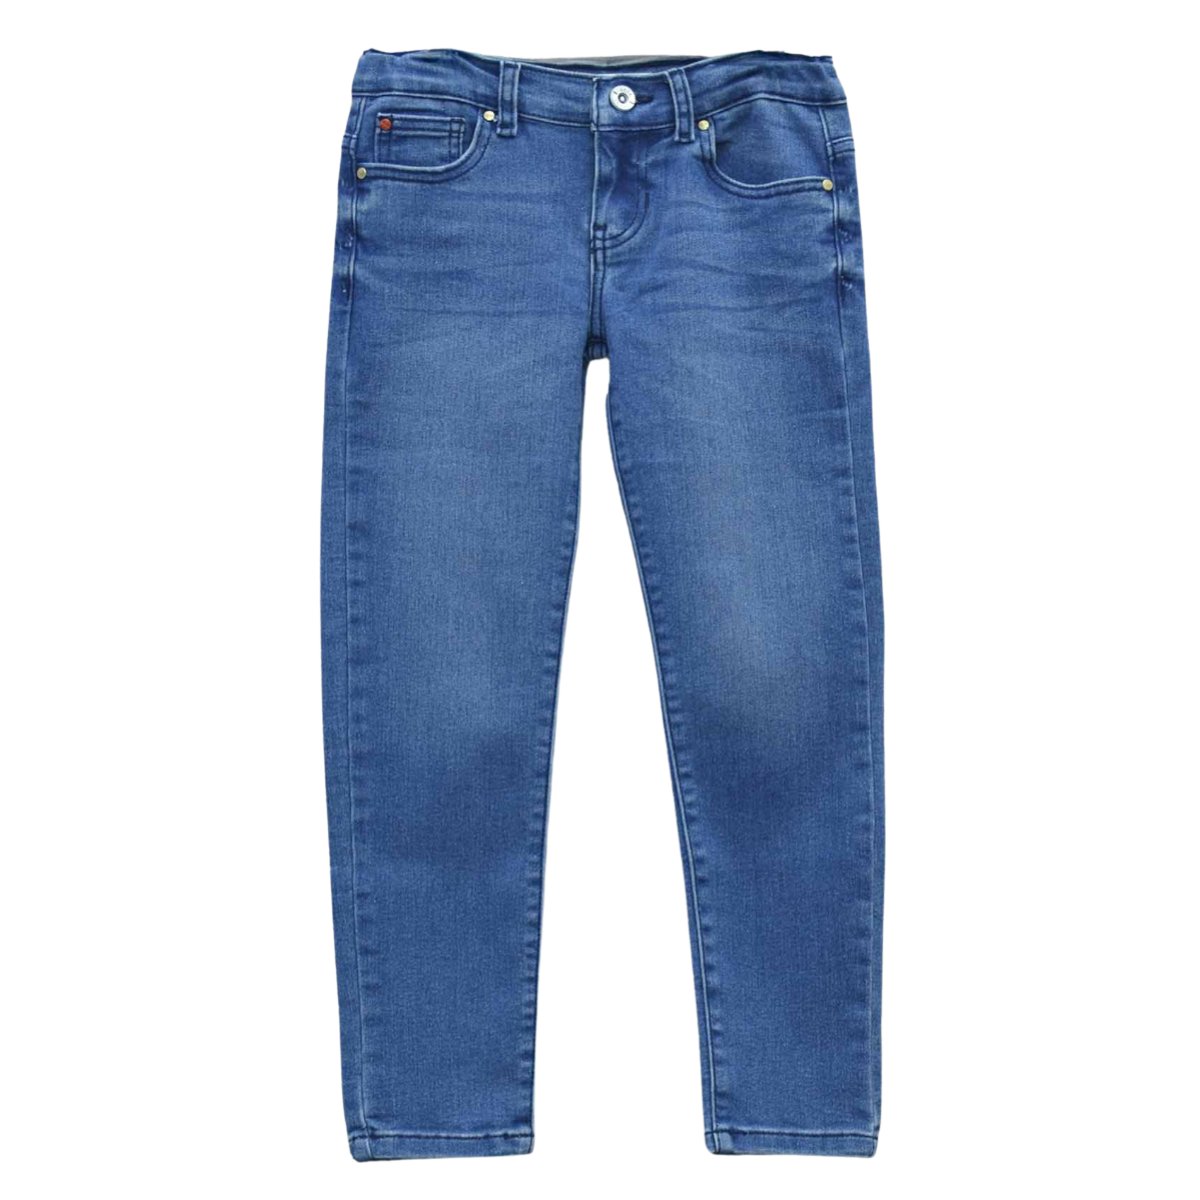 https://resources.claroshop.com/medios-plazavip/mkt/64f23169ab20c_jeans-para-ni-a-slim-fit-frente-clarojpg.jpg?scale=500&qlty=75